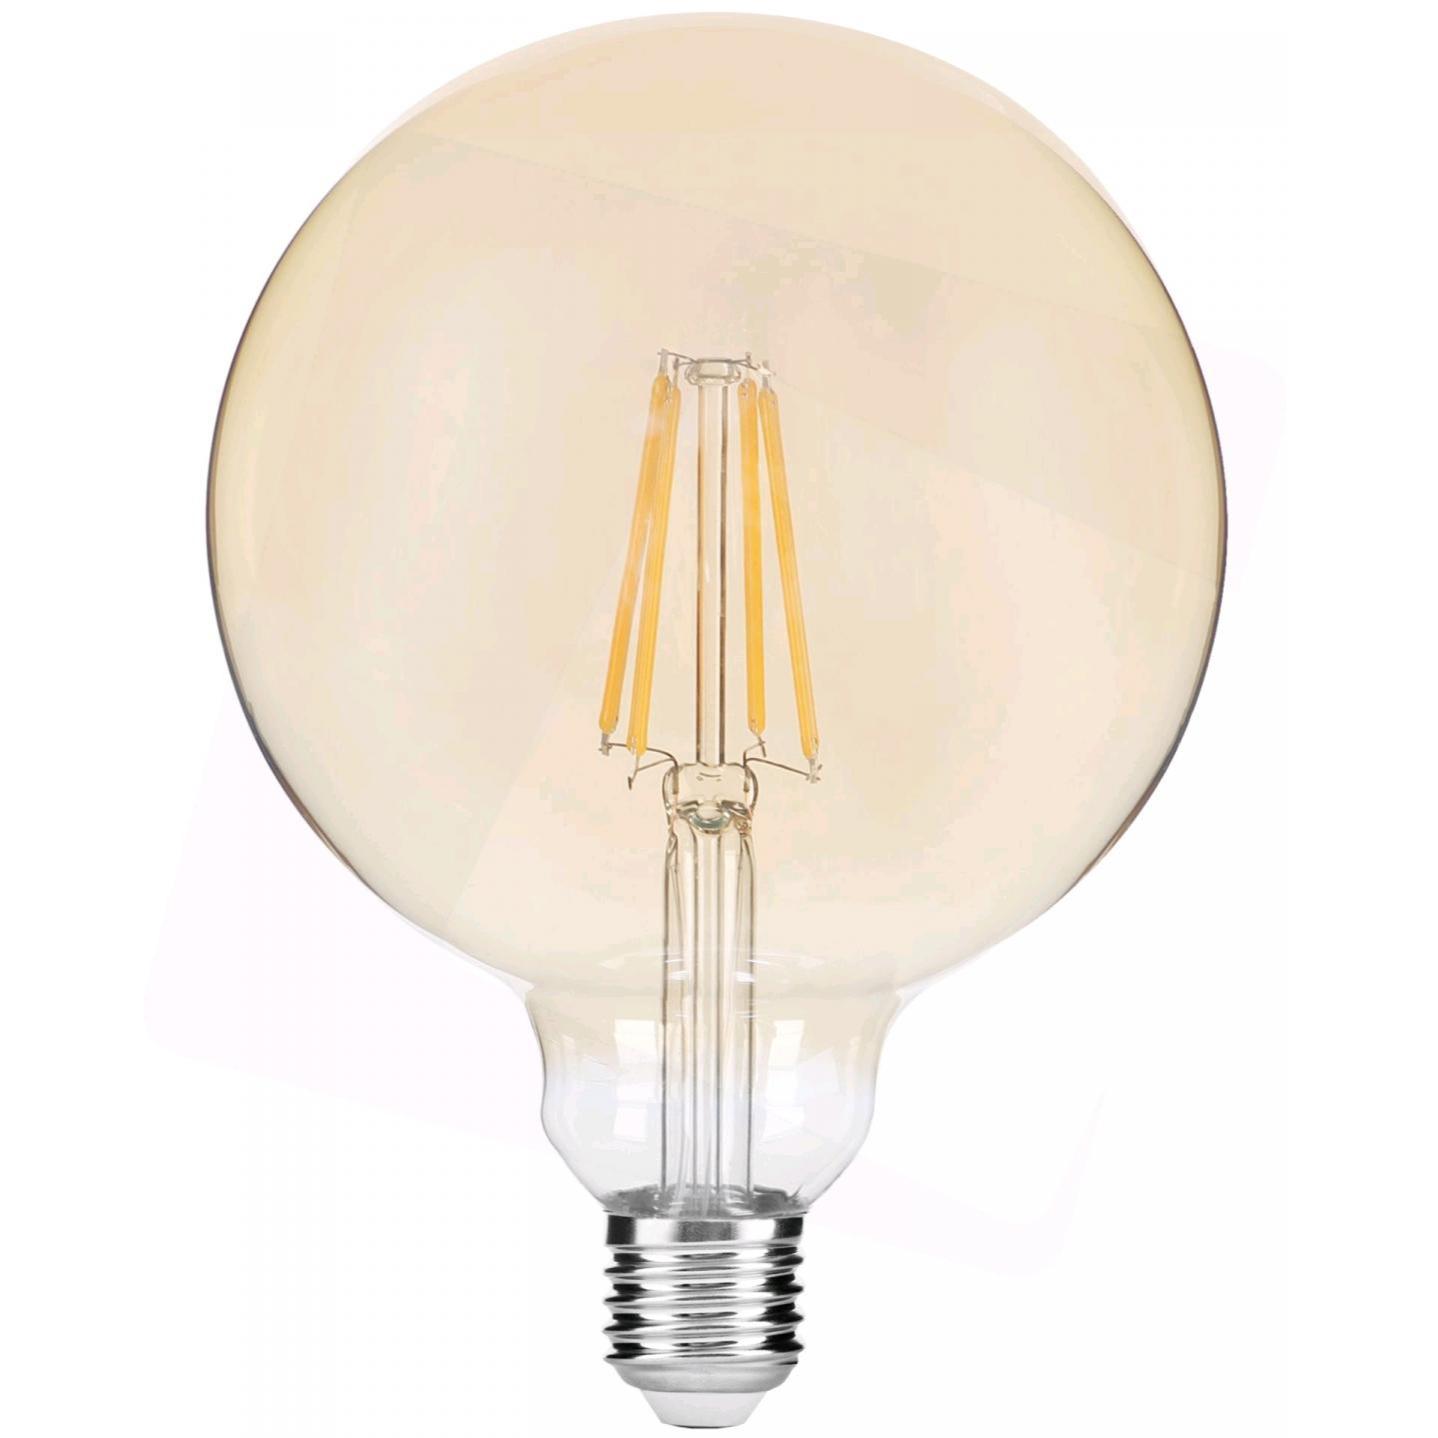 bagageruimte Discrepantie Raak verstrikt E27 filament led lamp - Type: E27 Lamptype: Led Vermogen: 8 Watt - 230 Volt  Lichtsterkte: 725 lumen Lichtkleur: Extra warm wit